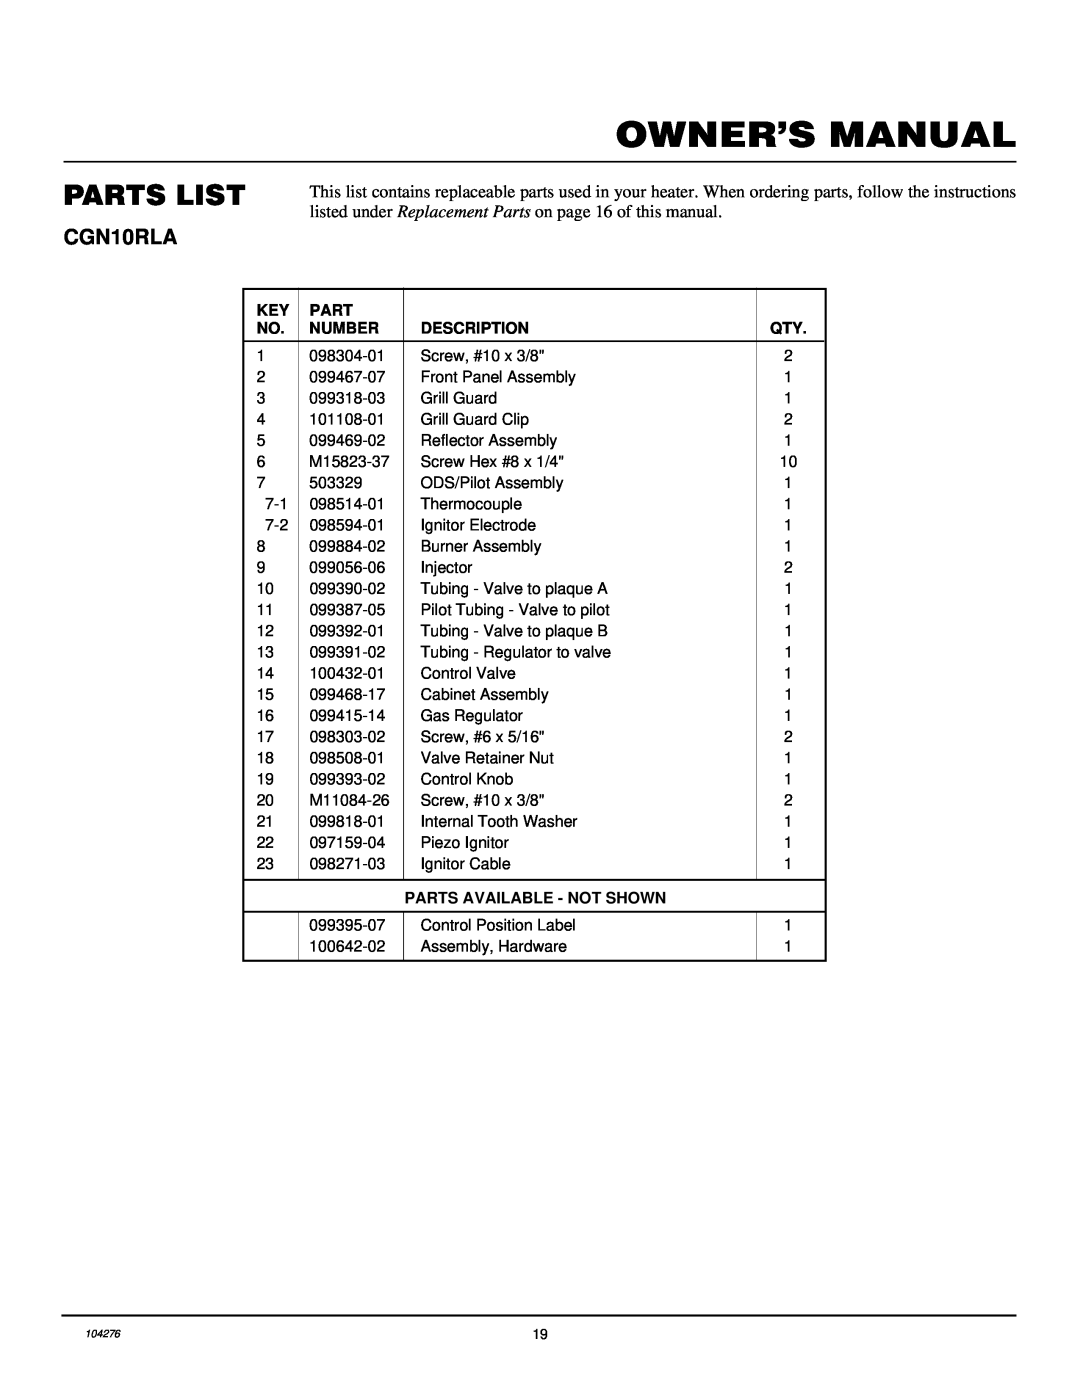 Desa CGN10RLA installation manual Parts List, Number, Description, Parts Available - Not Shown 